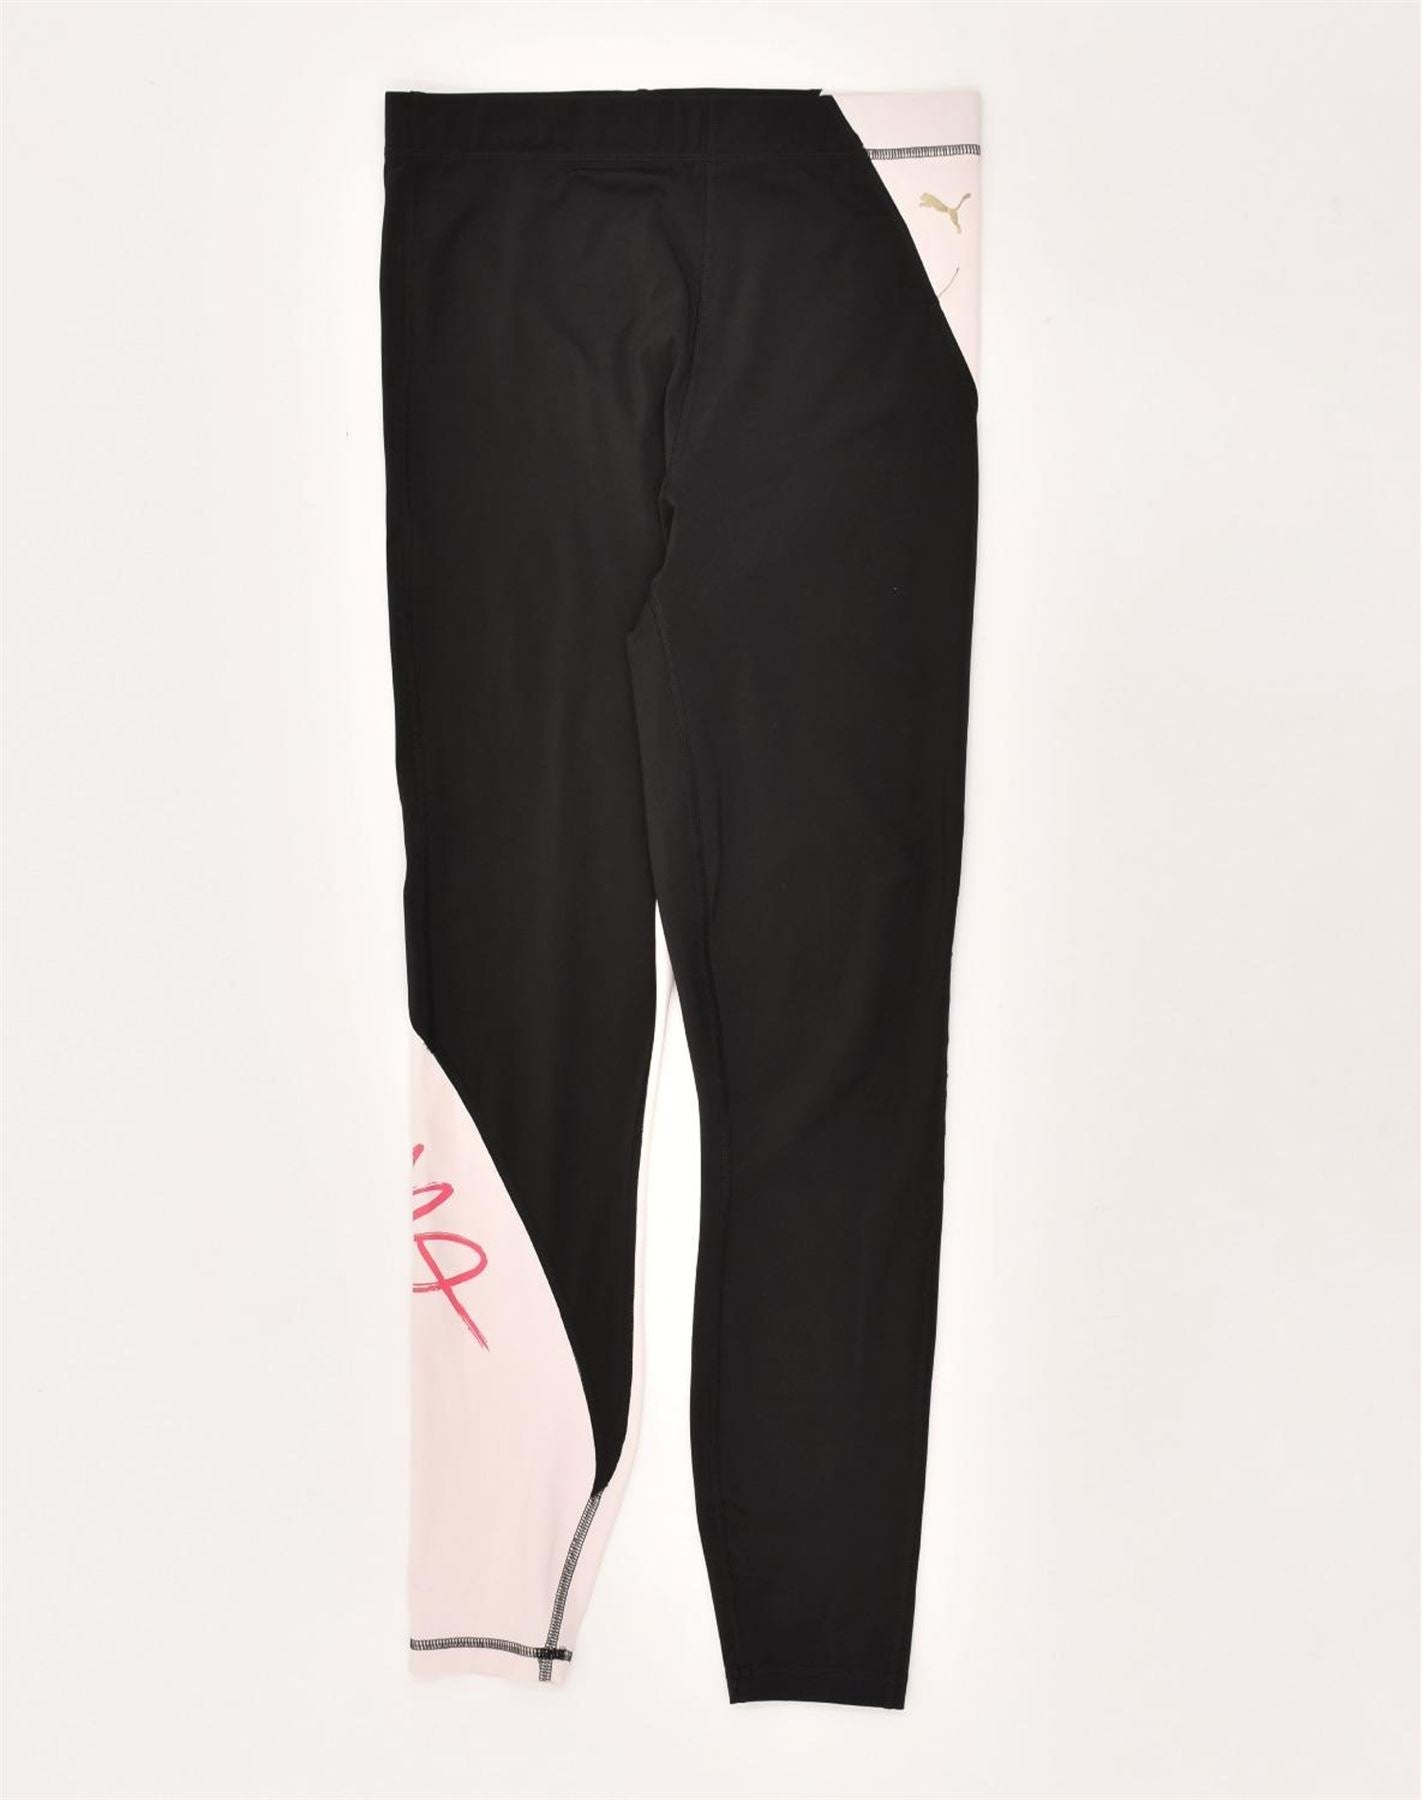 PUMA Womens Leggings UK 10 Small Black Colourblock, Vintage & Second-Hand  Clothing Online